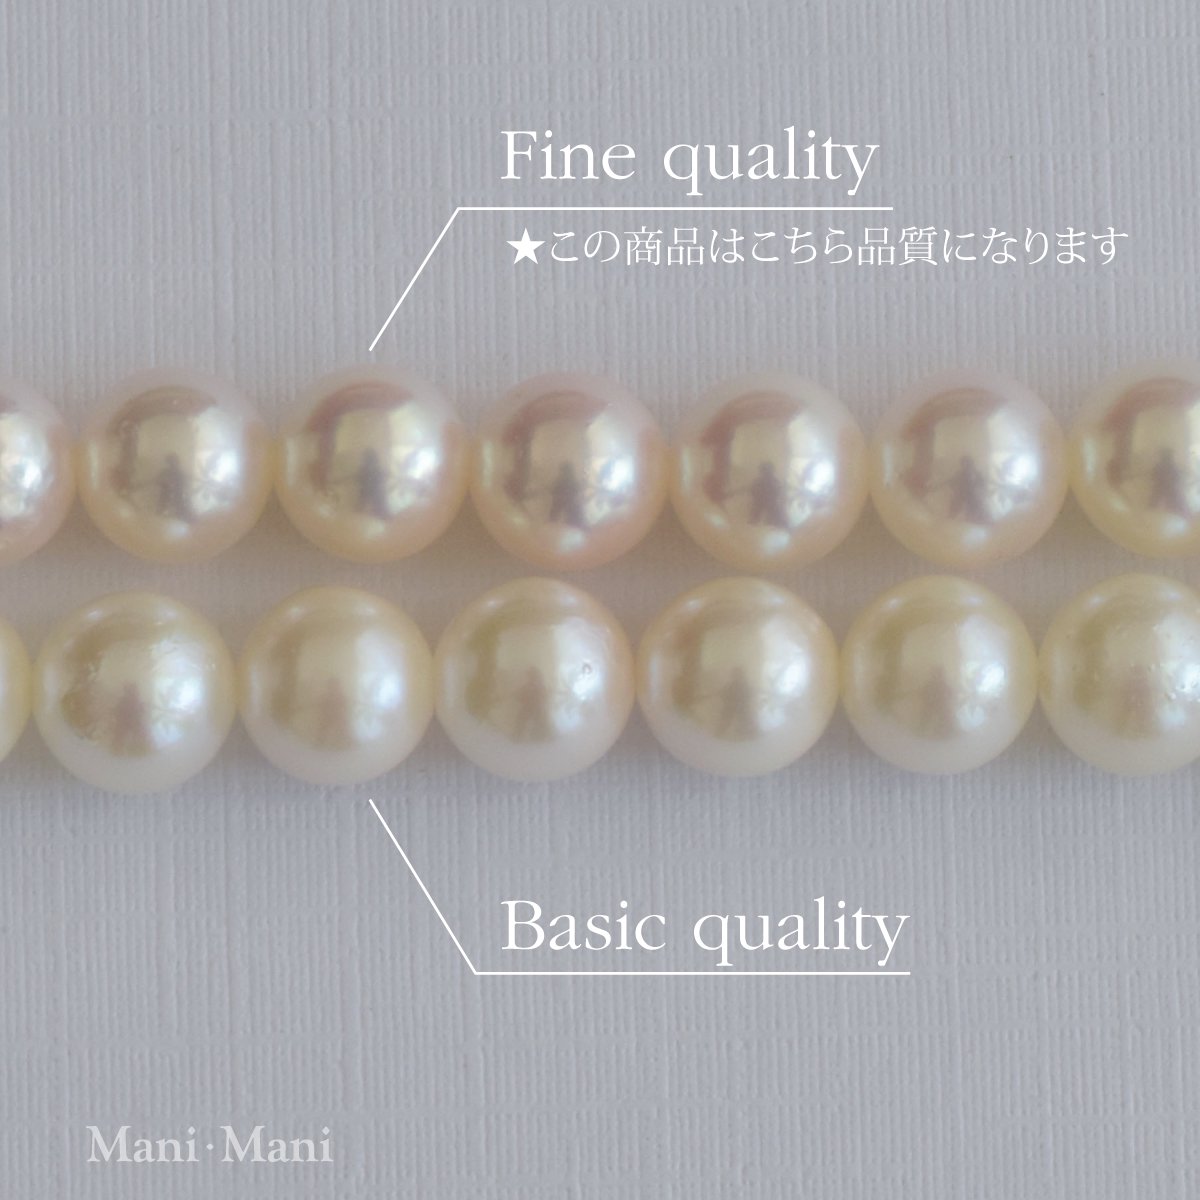 Fine quality》あこや真珠 ネックレス・イヤリングセット 7.0－7.5mm